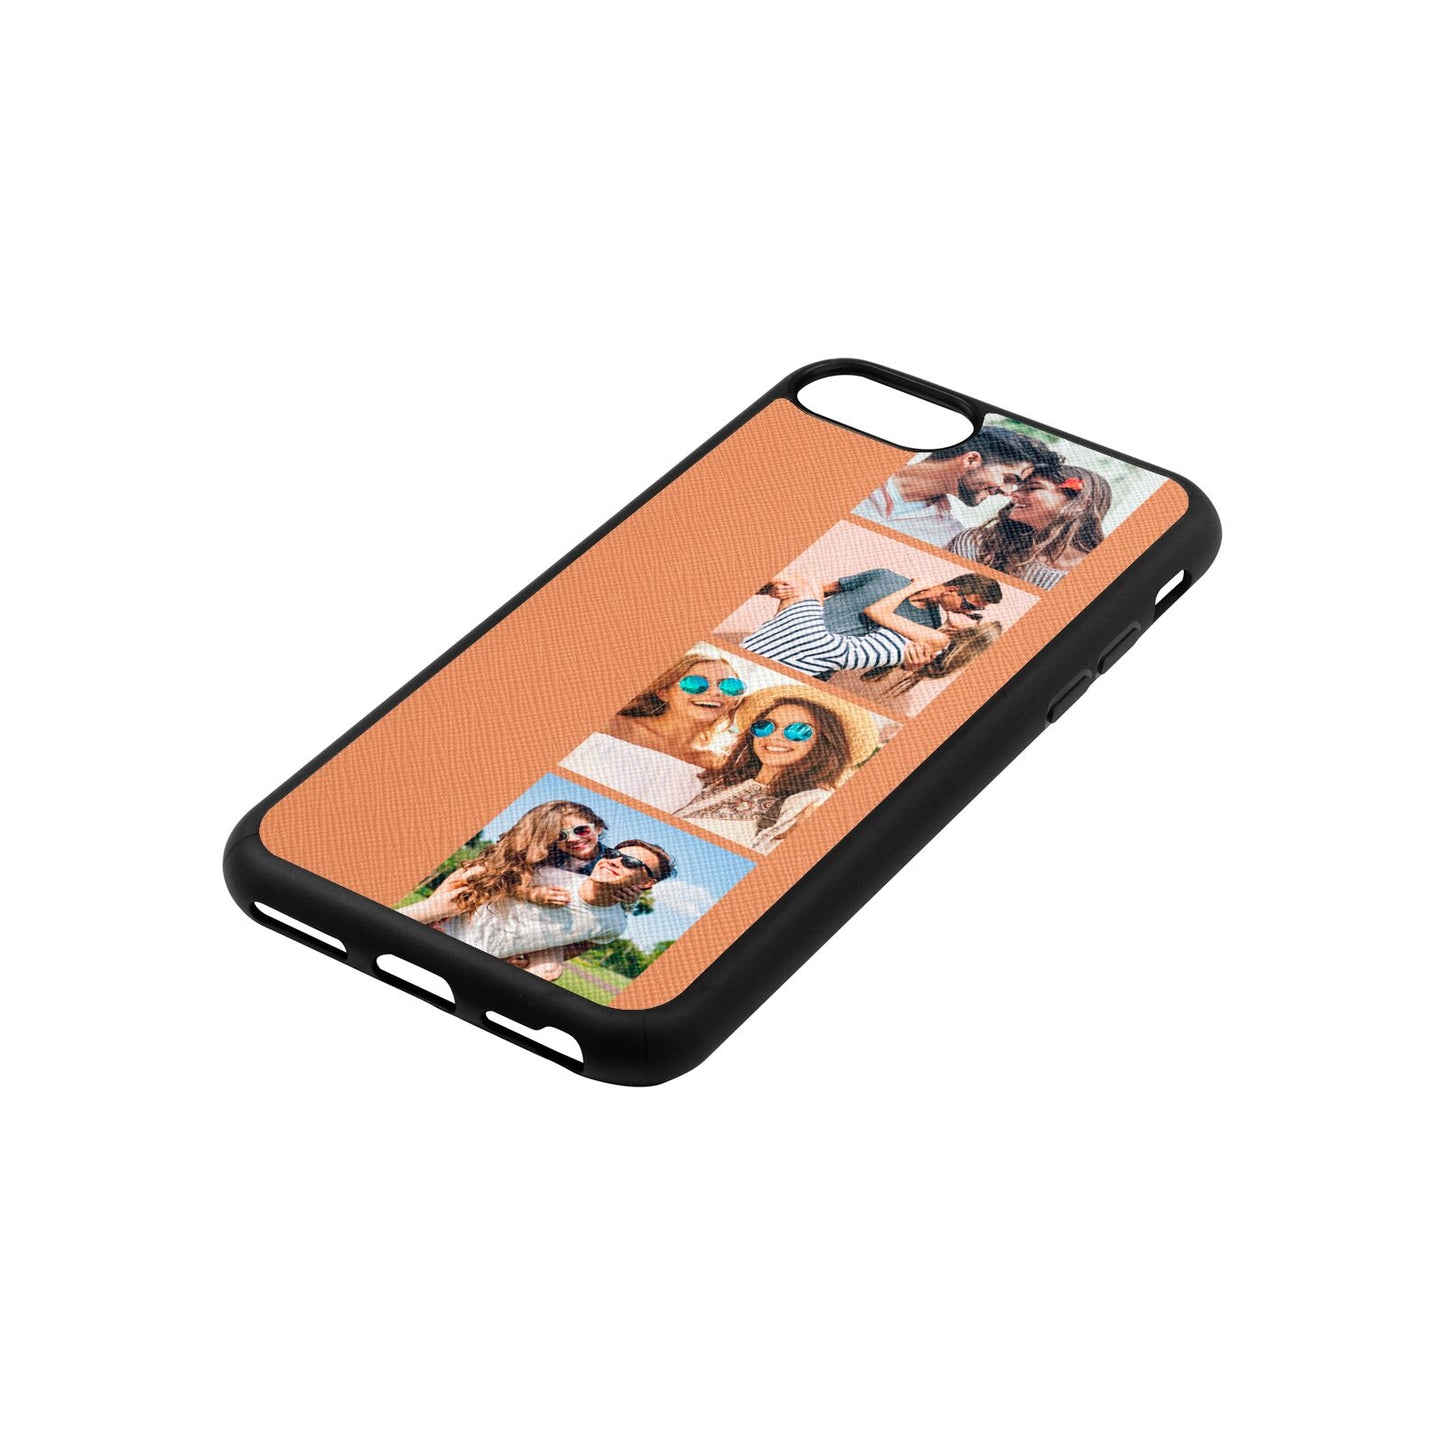 Photo Strip Montage Upload Orange Saffiano Leather iPhone 8 Case Side Angle